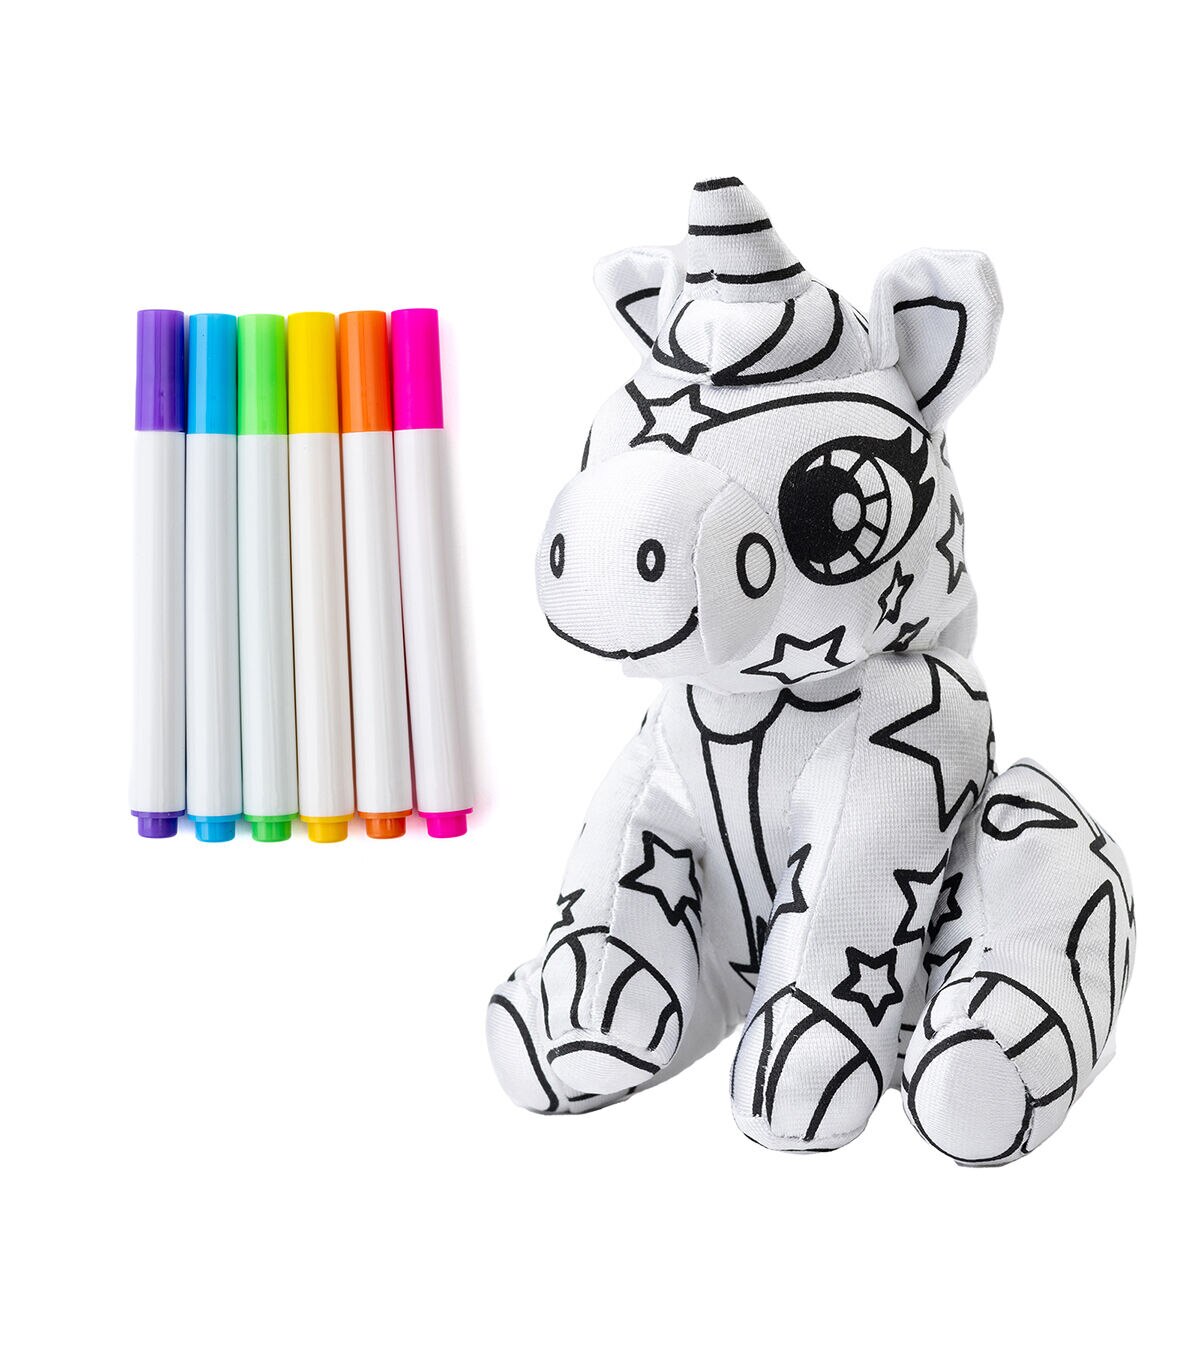 How to Draw a Unicorn – Create a Cute Unicorn Drawing